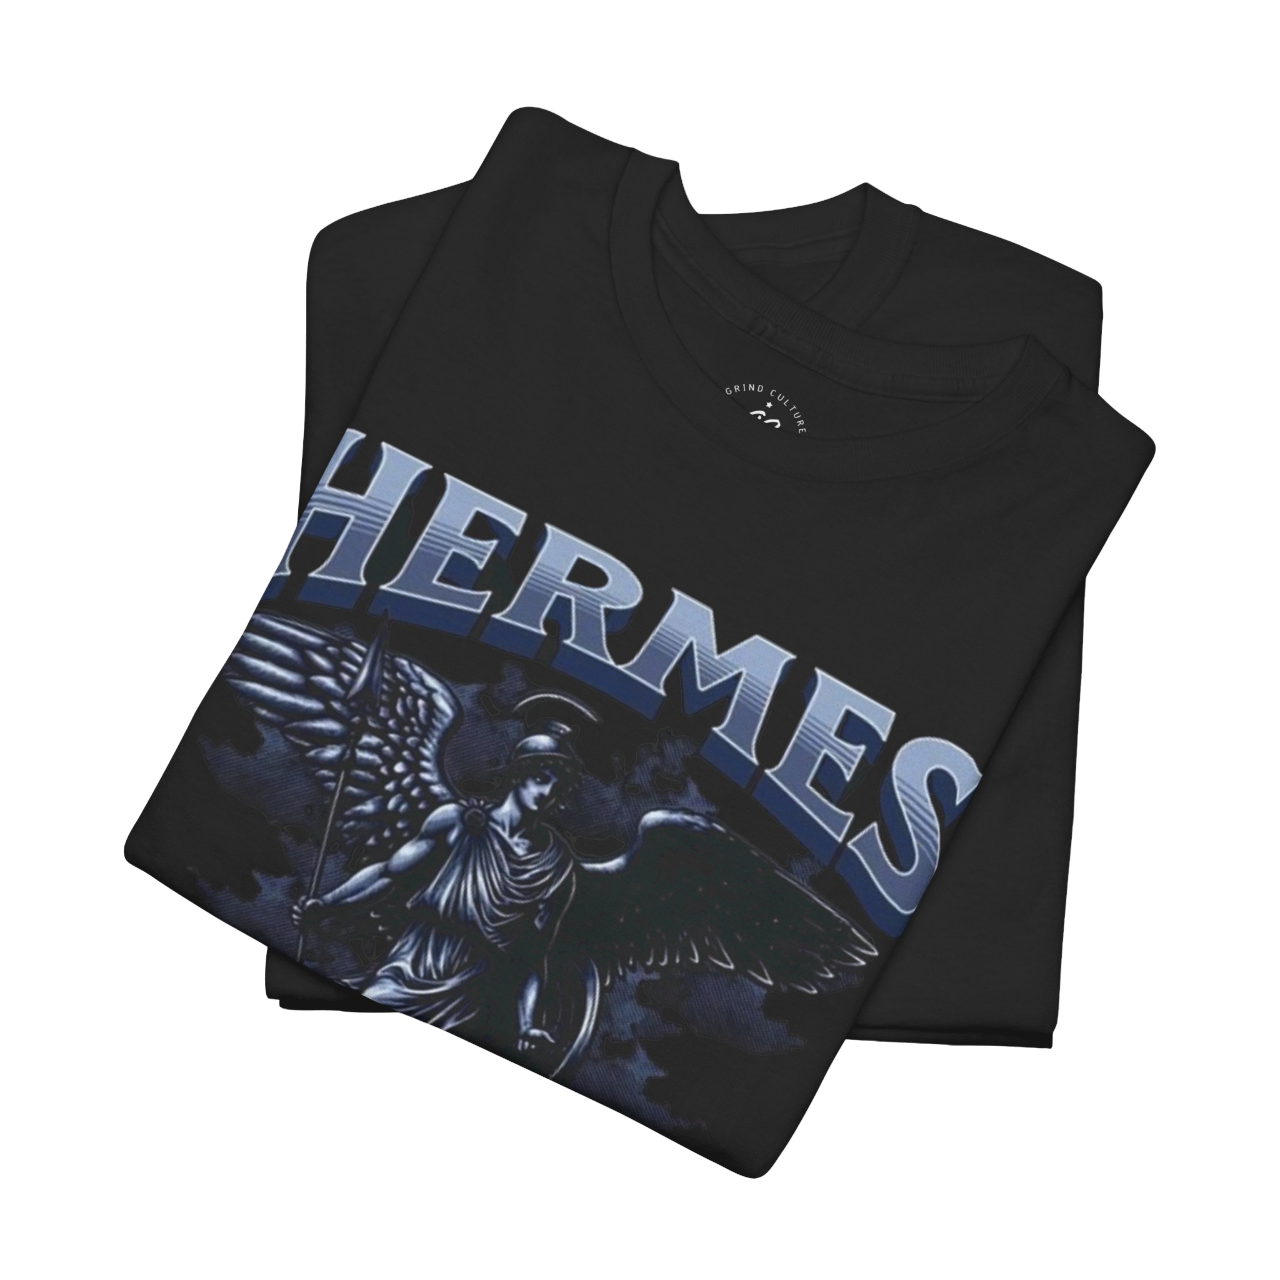 "HERMES" GRAPHIC TEE